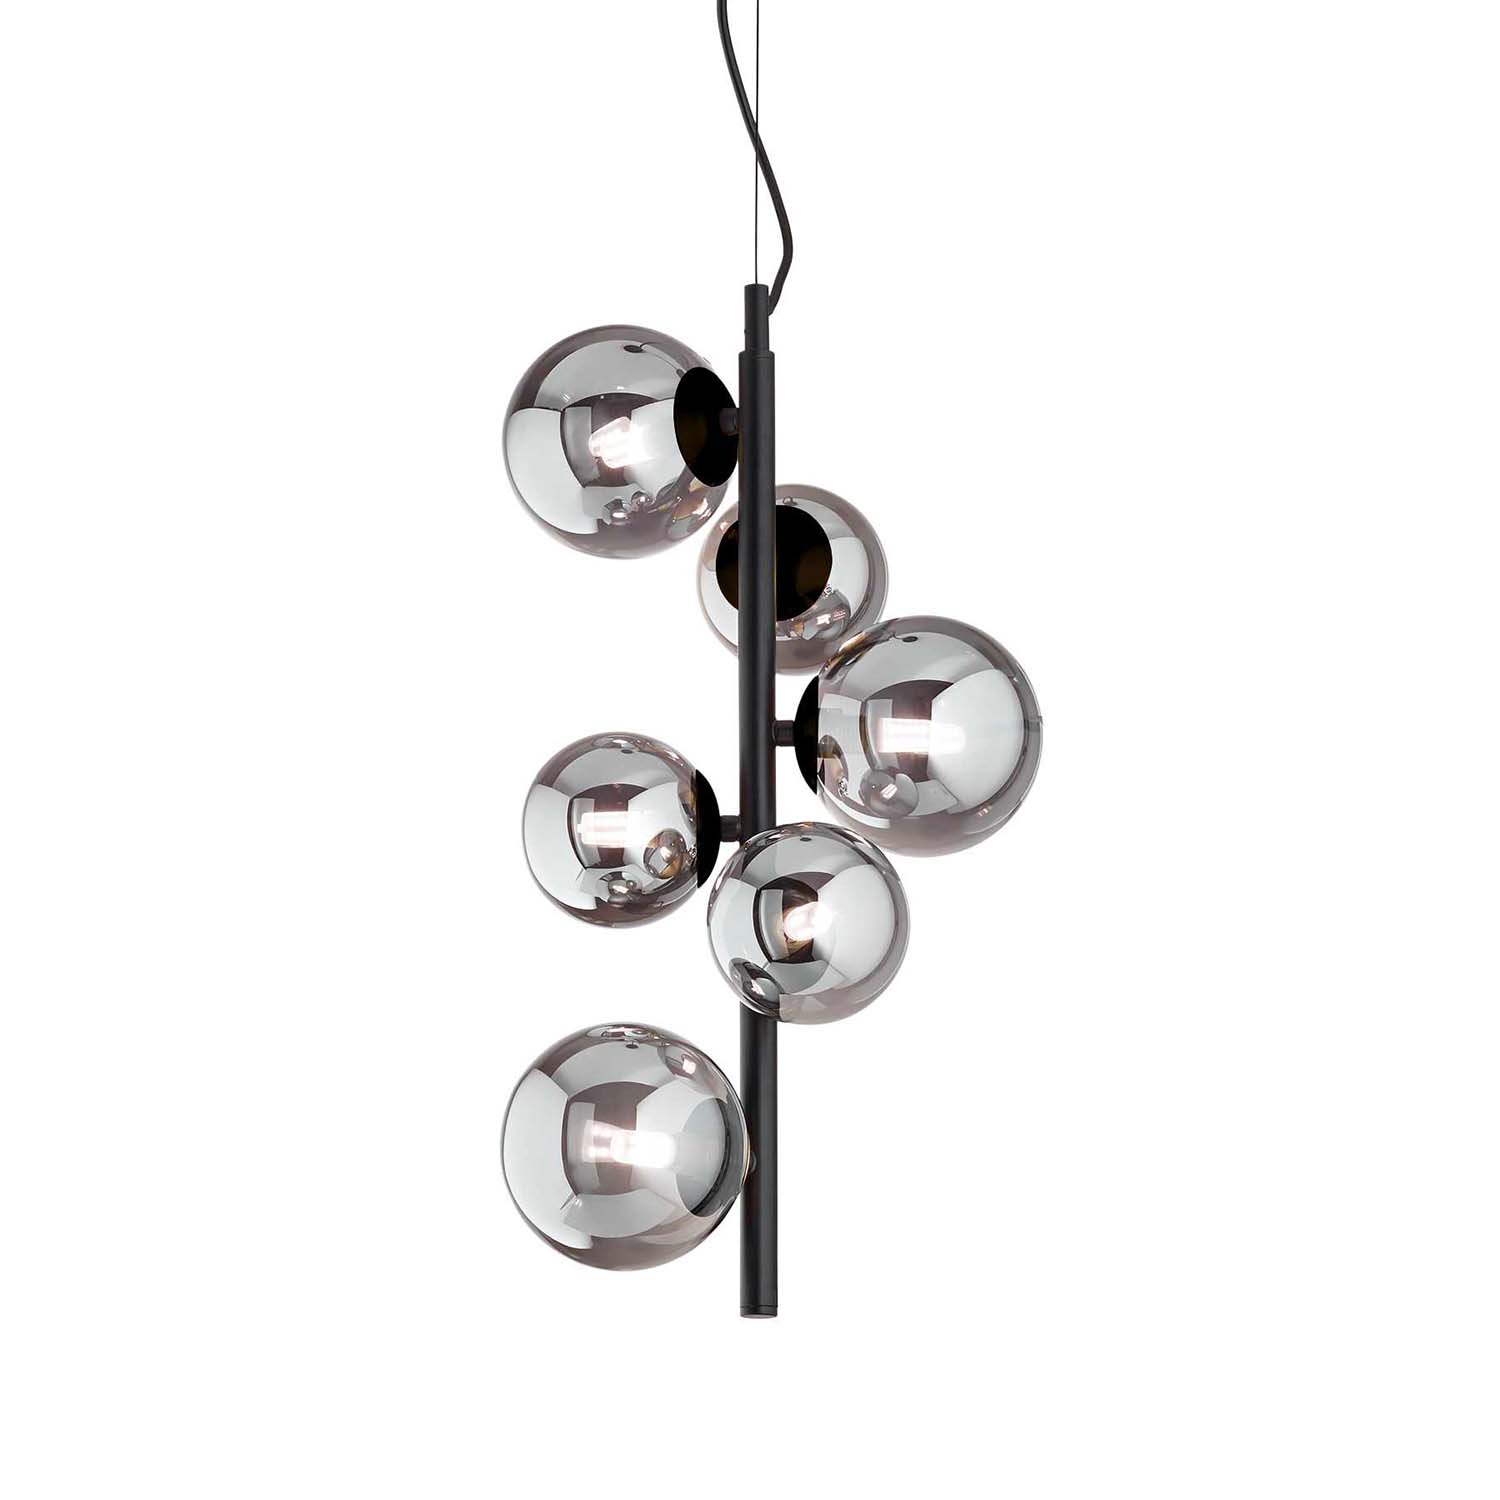 PERLAGE - Vertical pendant light with glass balls